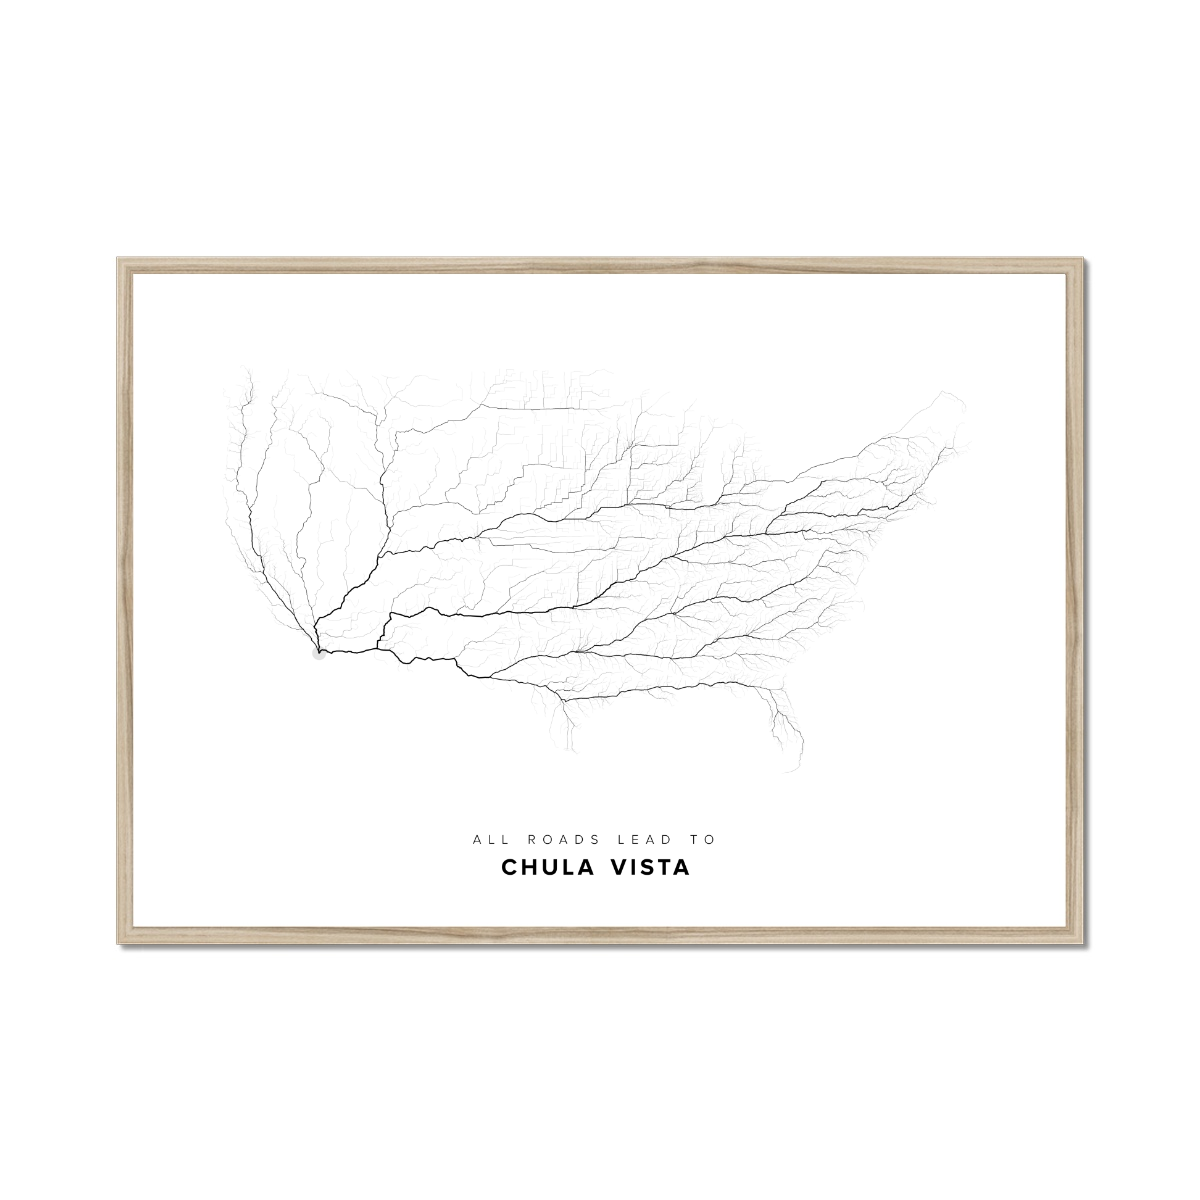 All roads lead to Chula Vista (United States of America) Fine Art Map Print